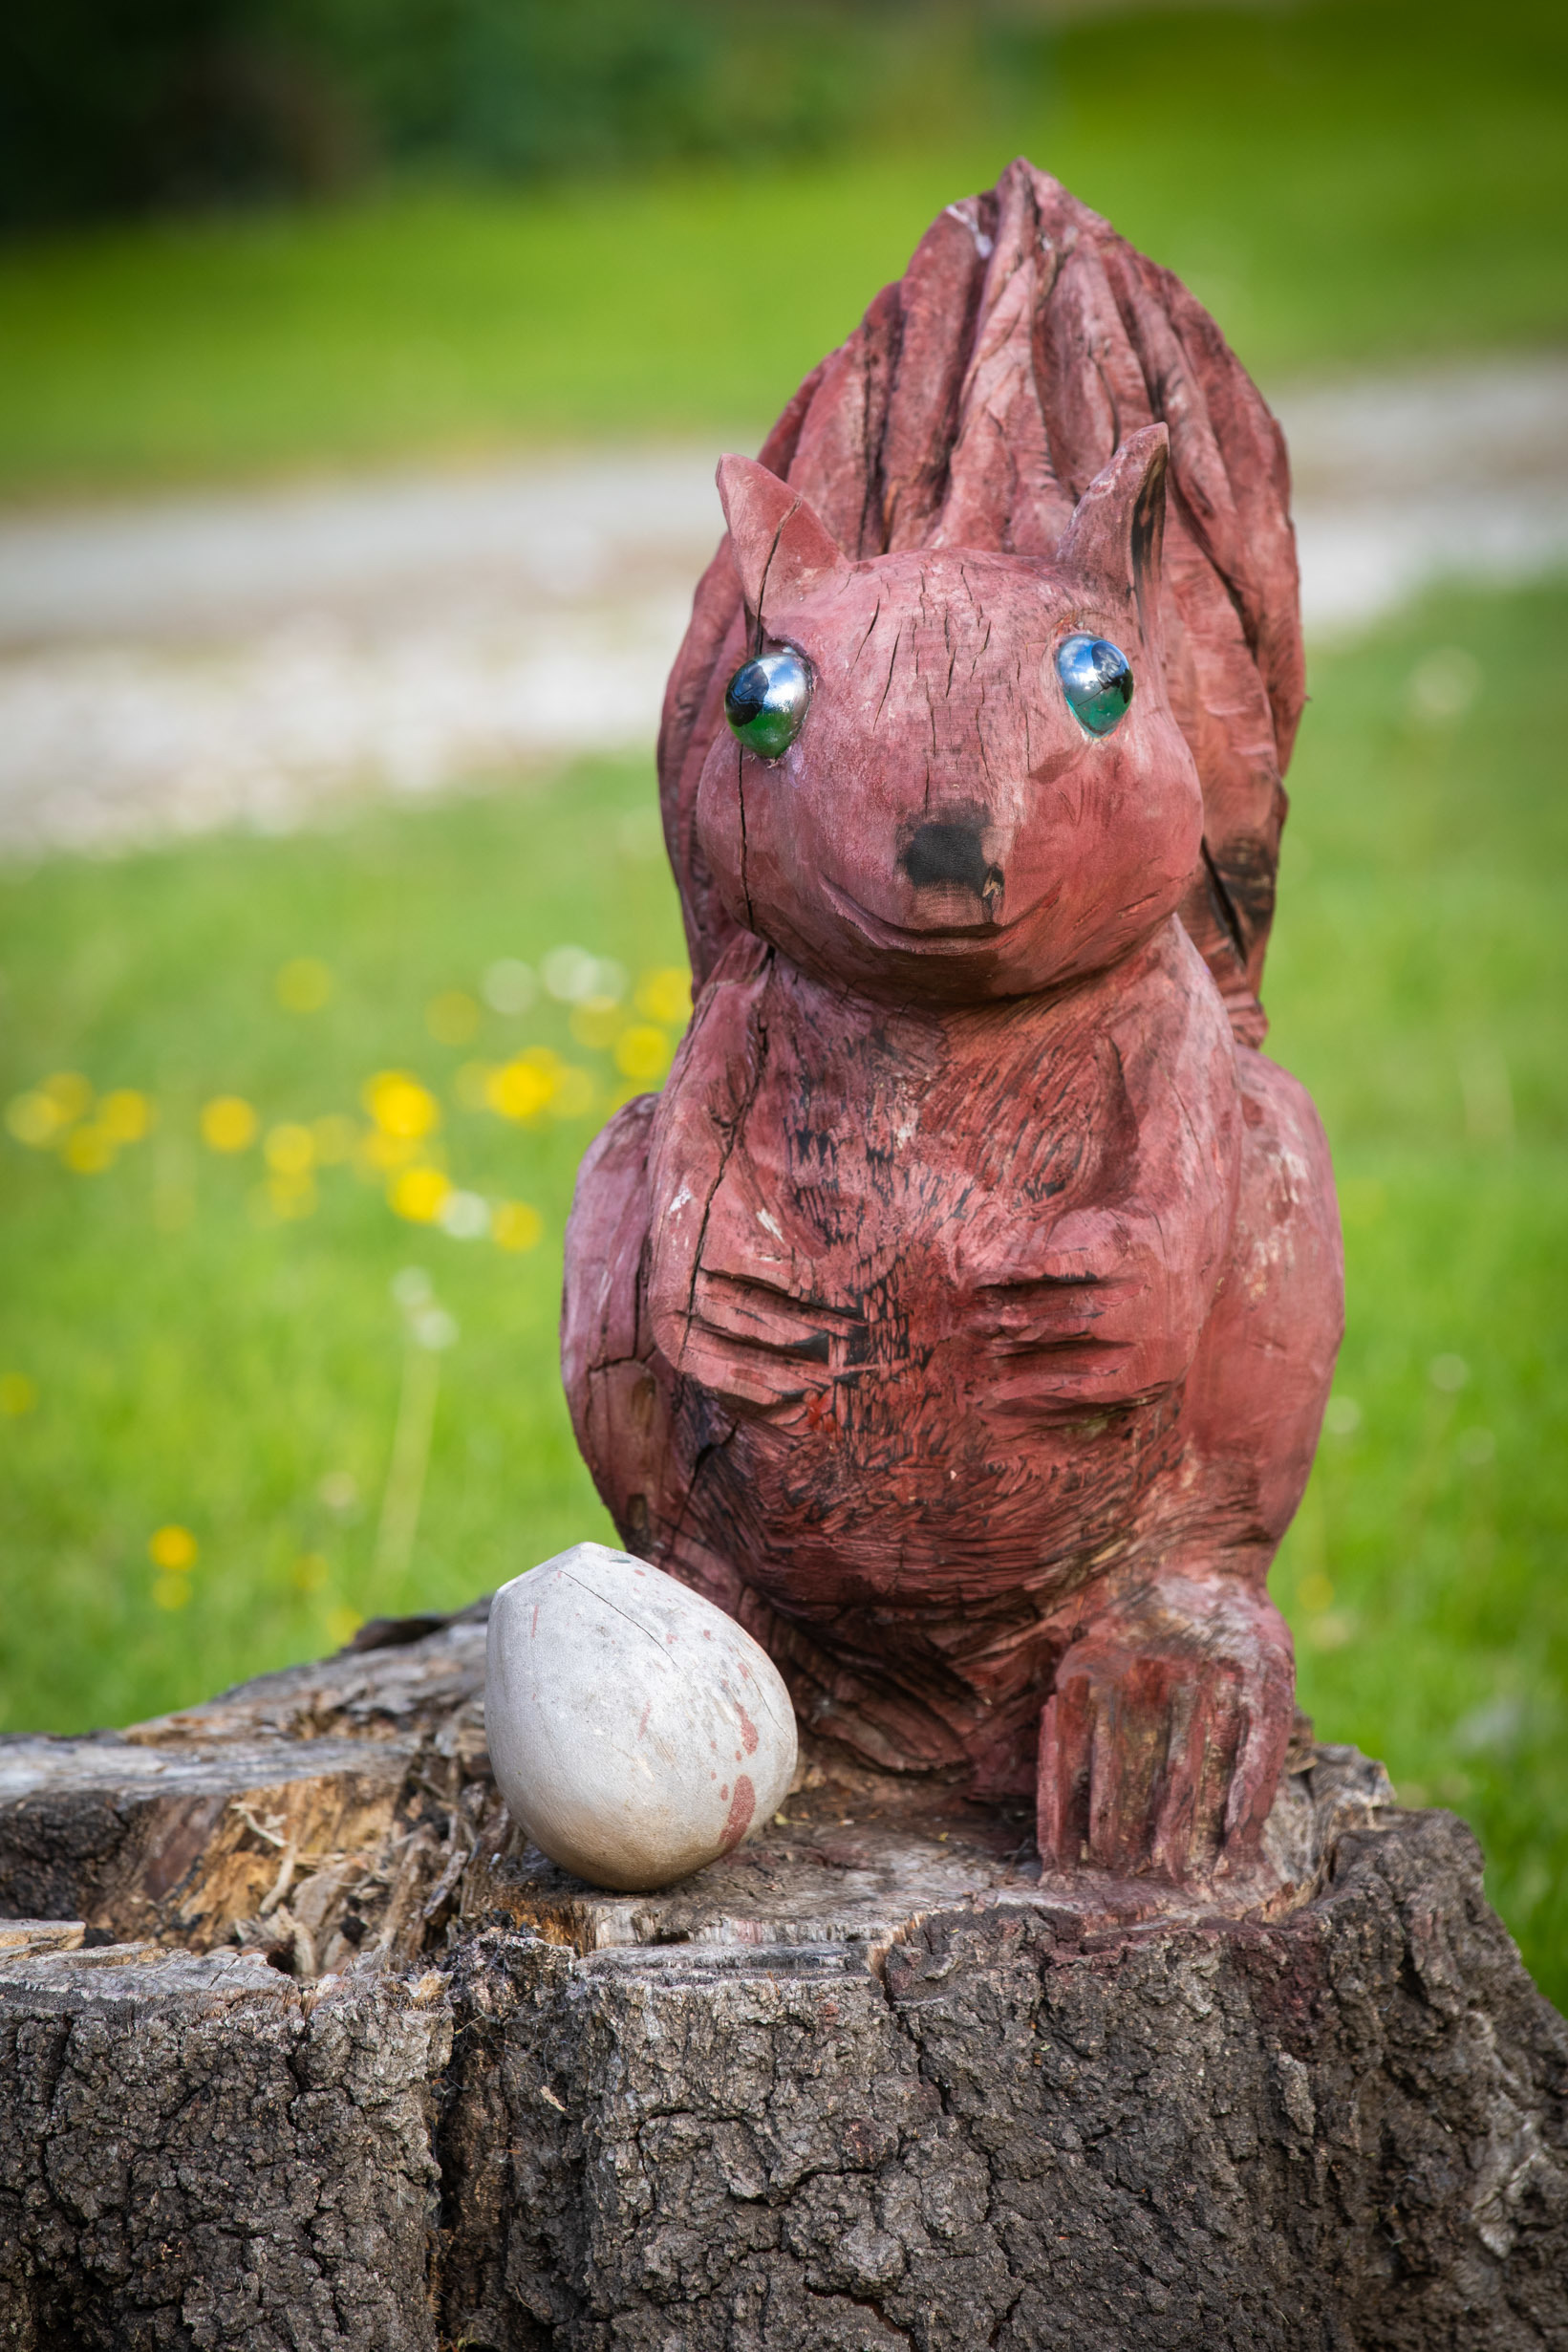 Squirrel sculpture by Paul Morris from the Pendine Park maintenance team. Photo: Mandy Jones